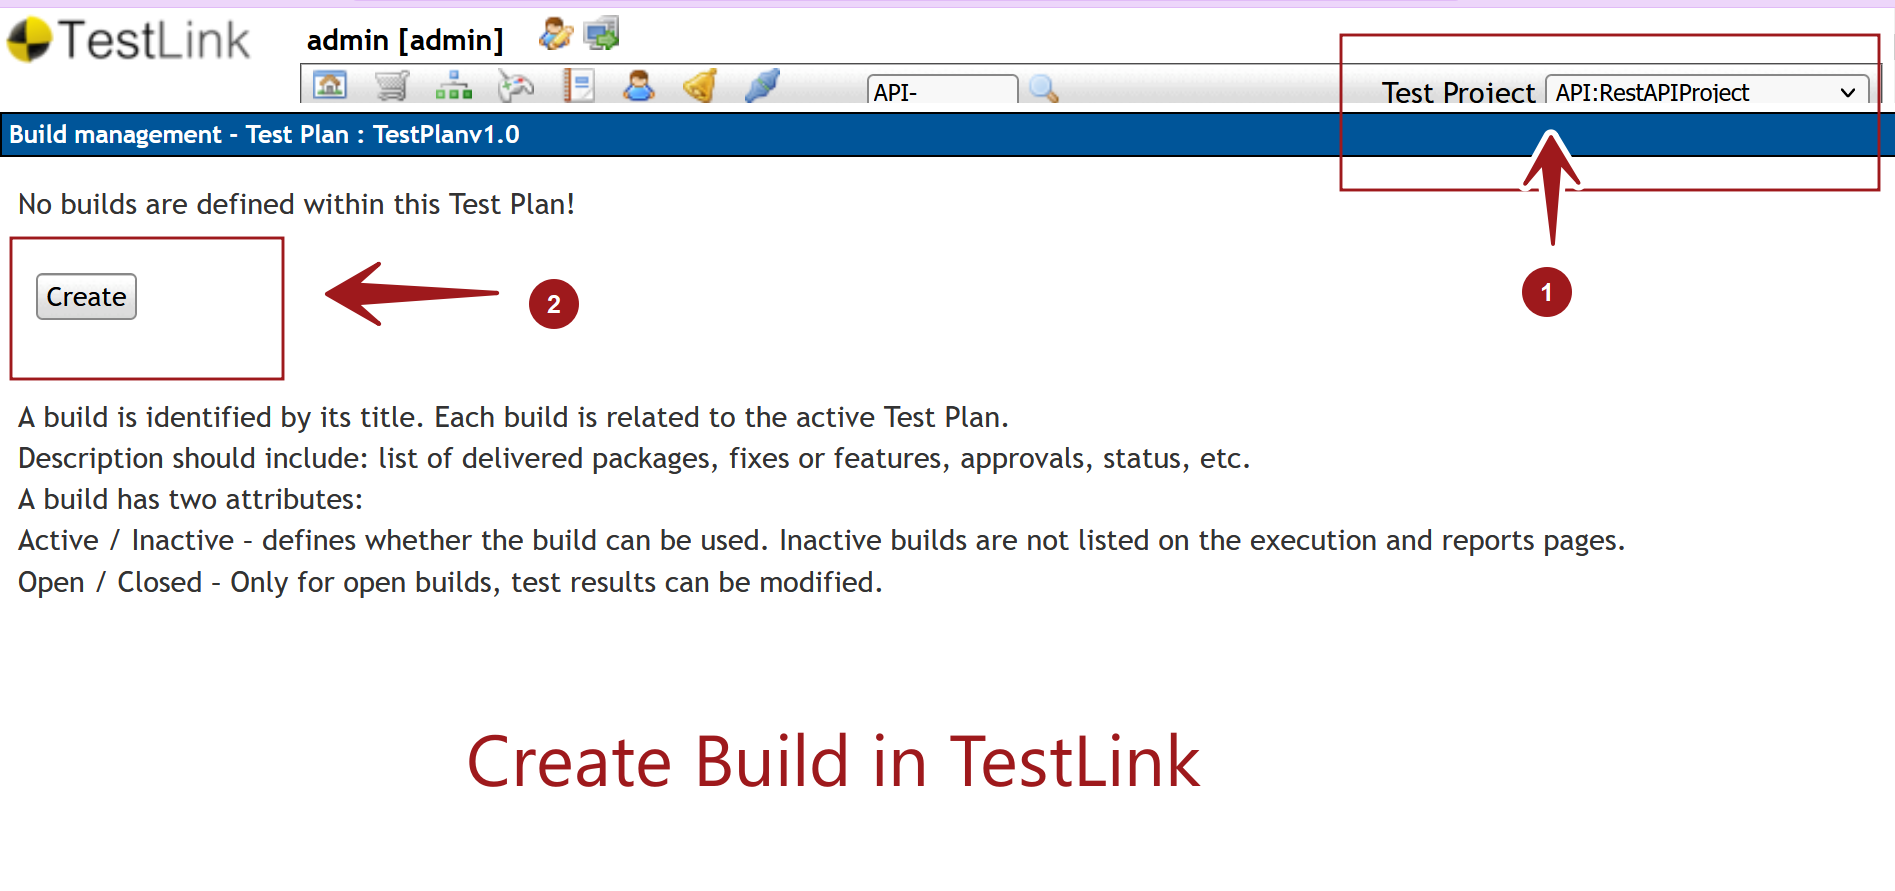 Create Build in TestLink